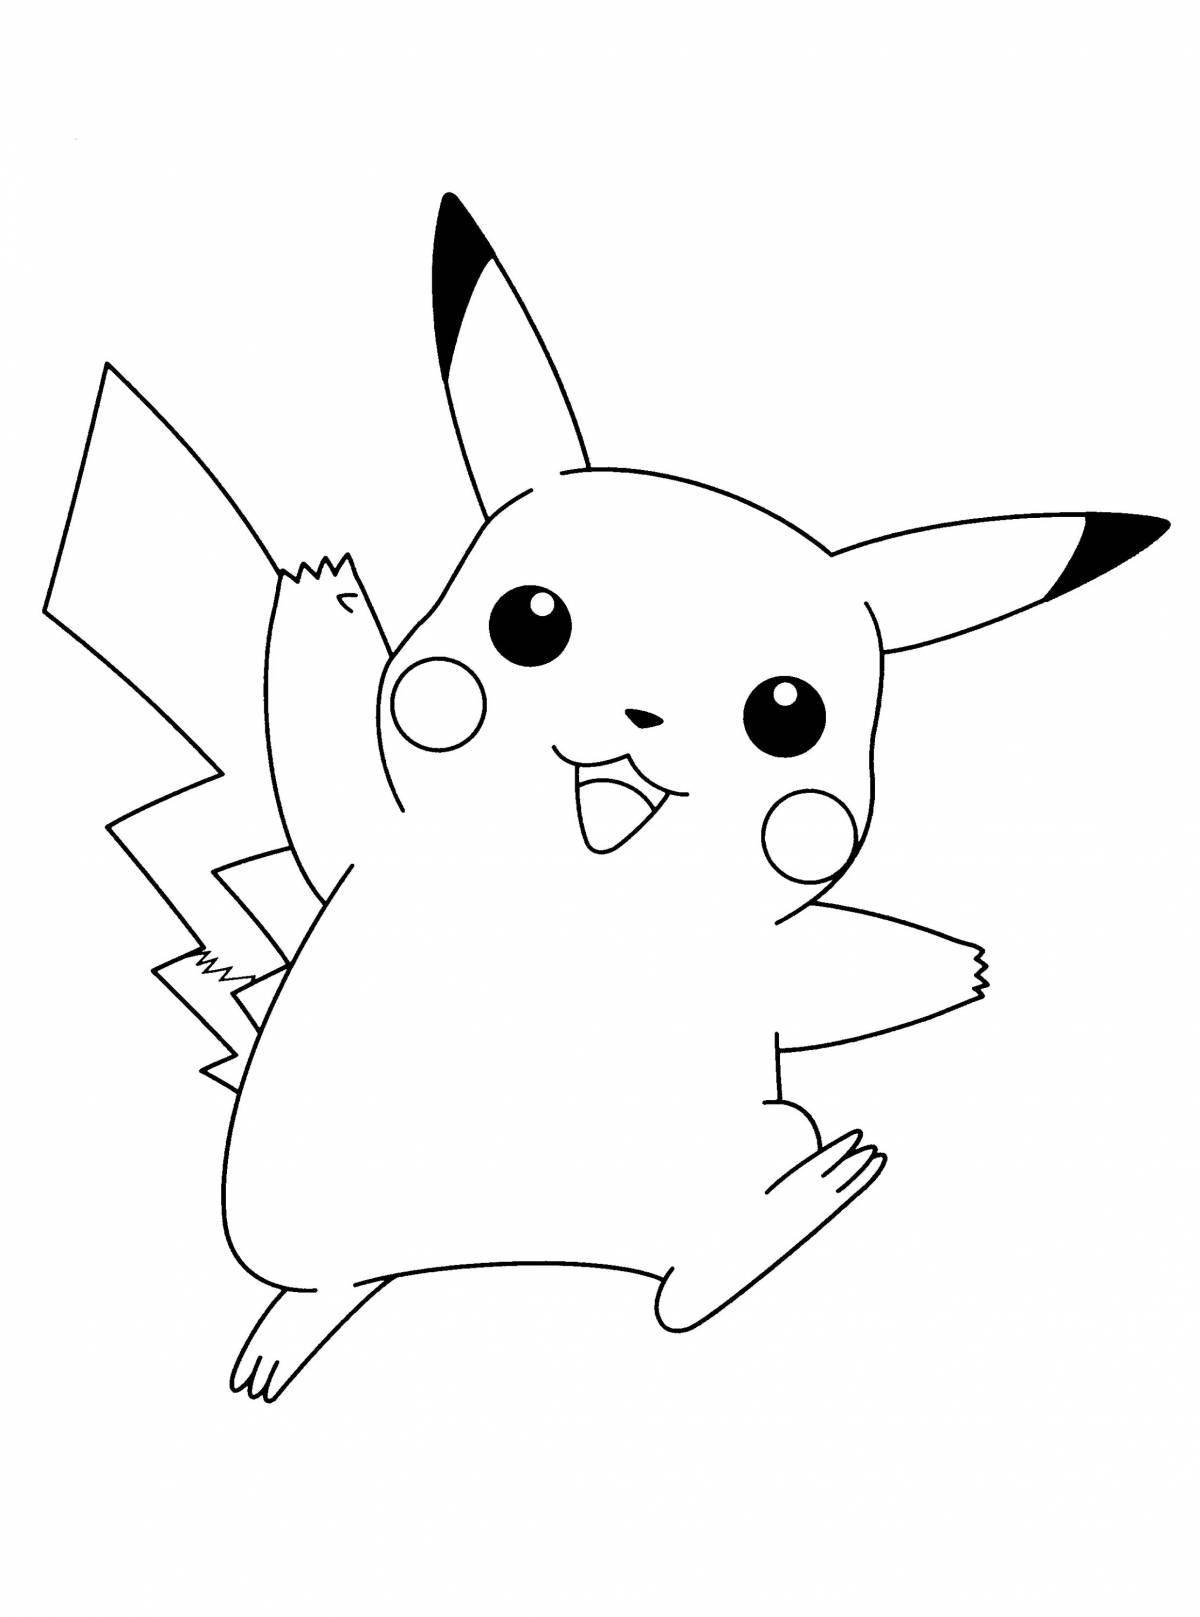 Pikachu figure coloring page